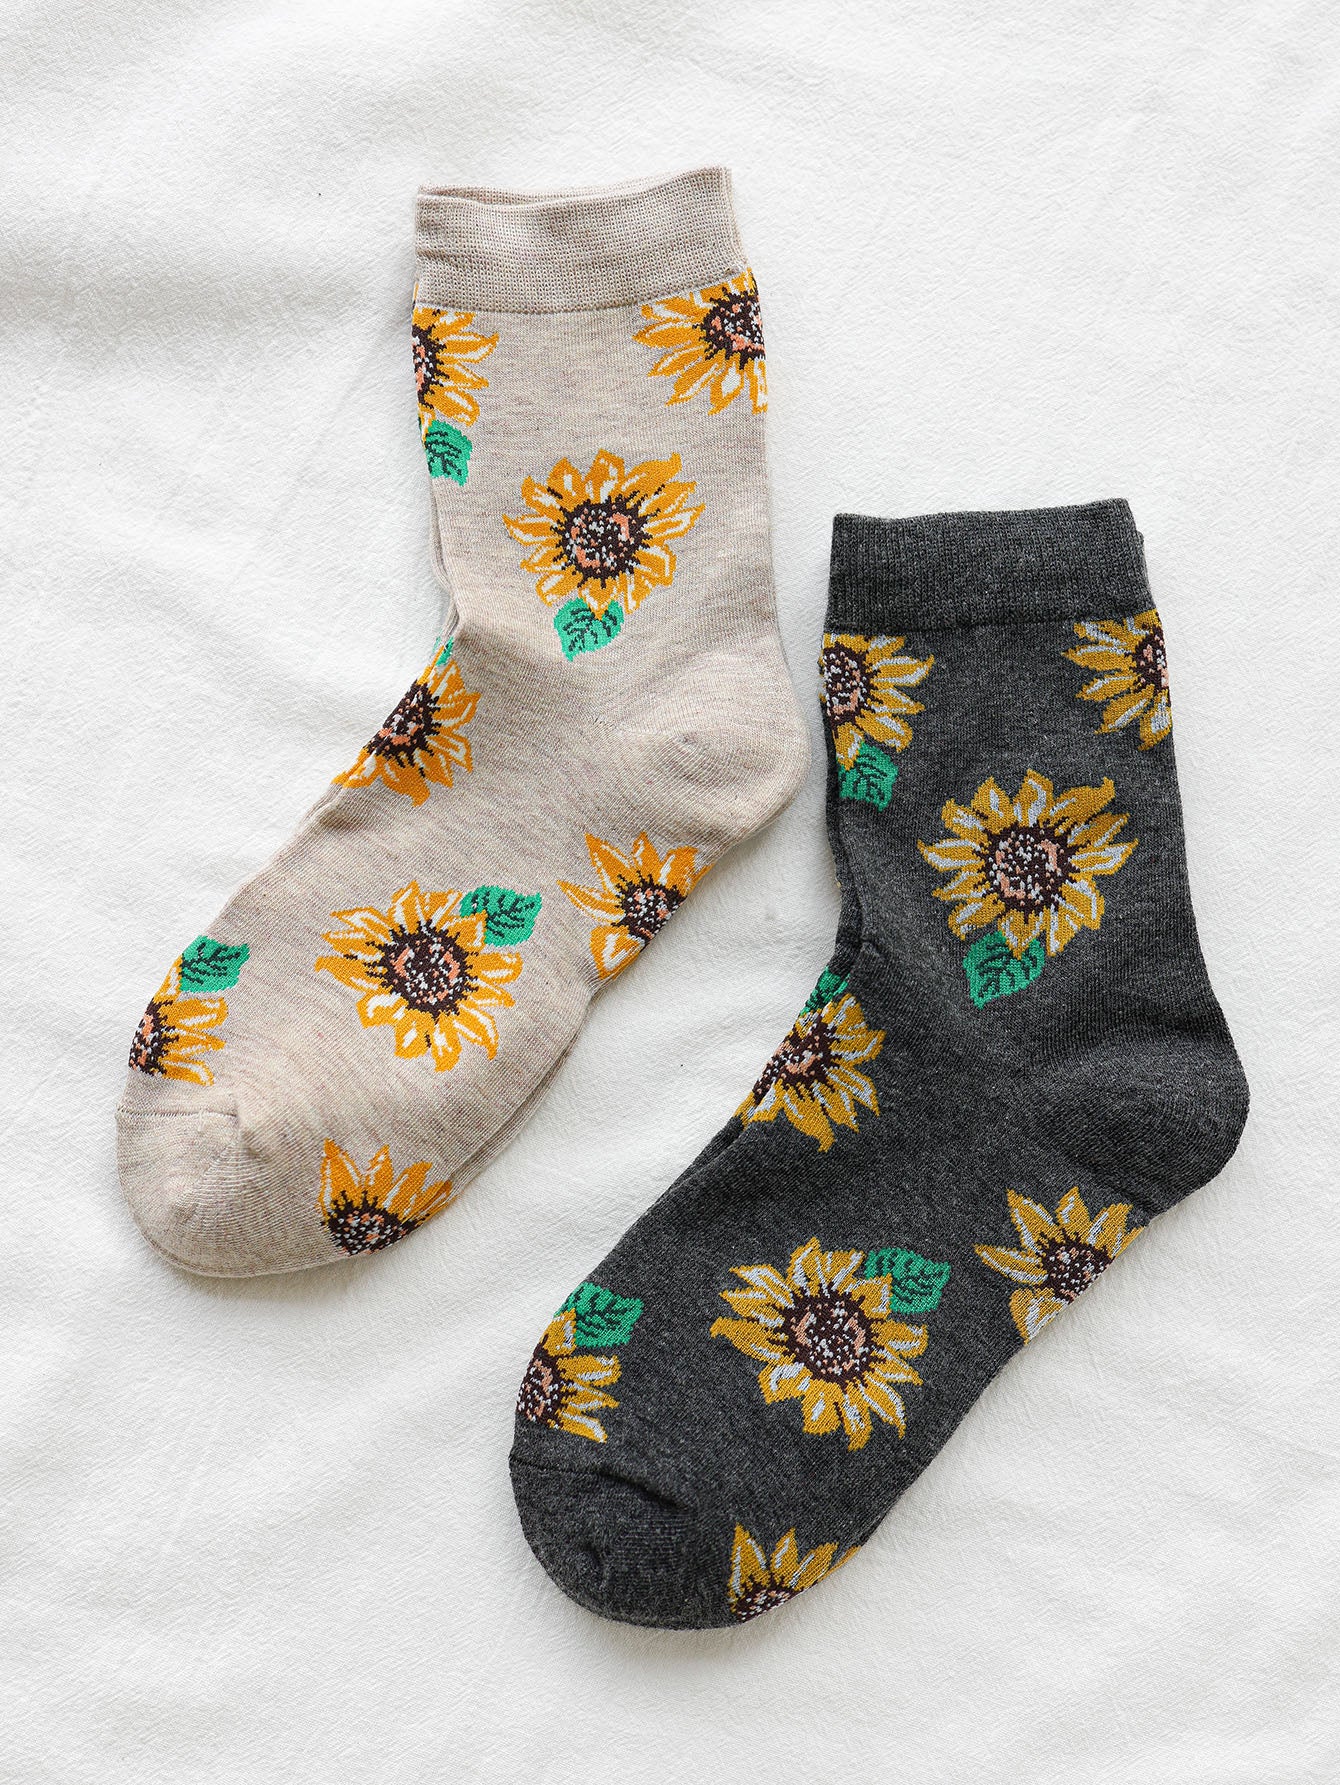 Sunflower Pattern Crew Socks - 2 pairs (Size 6-8 US)